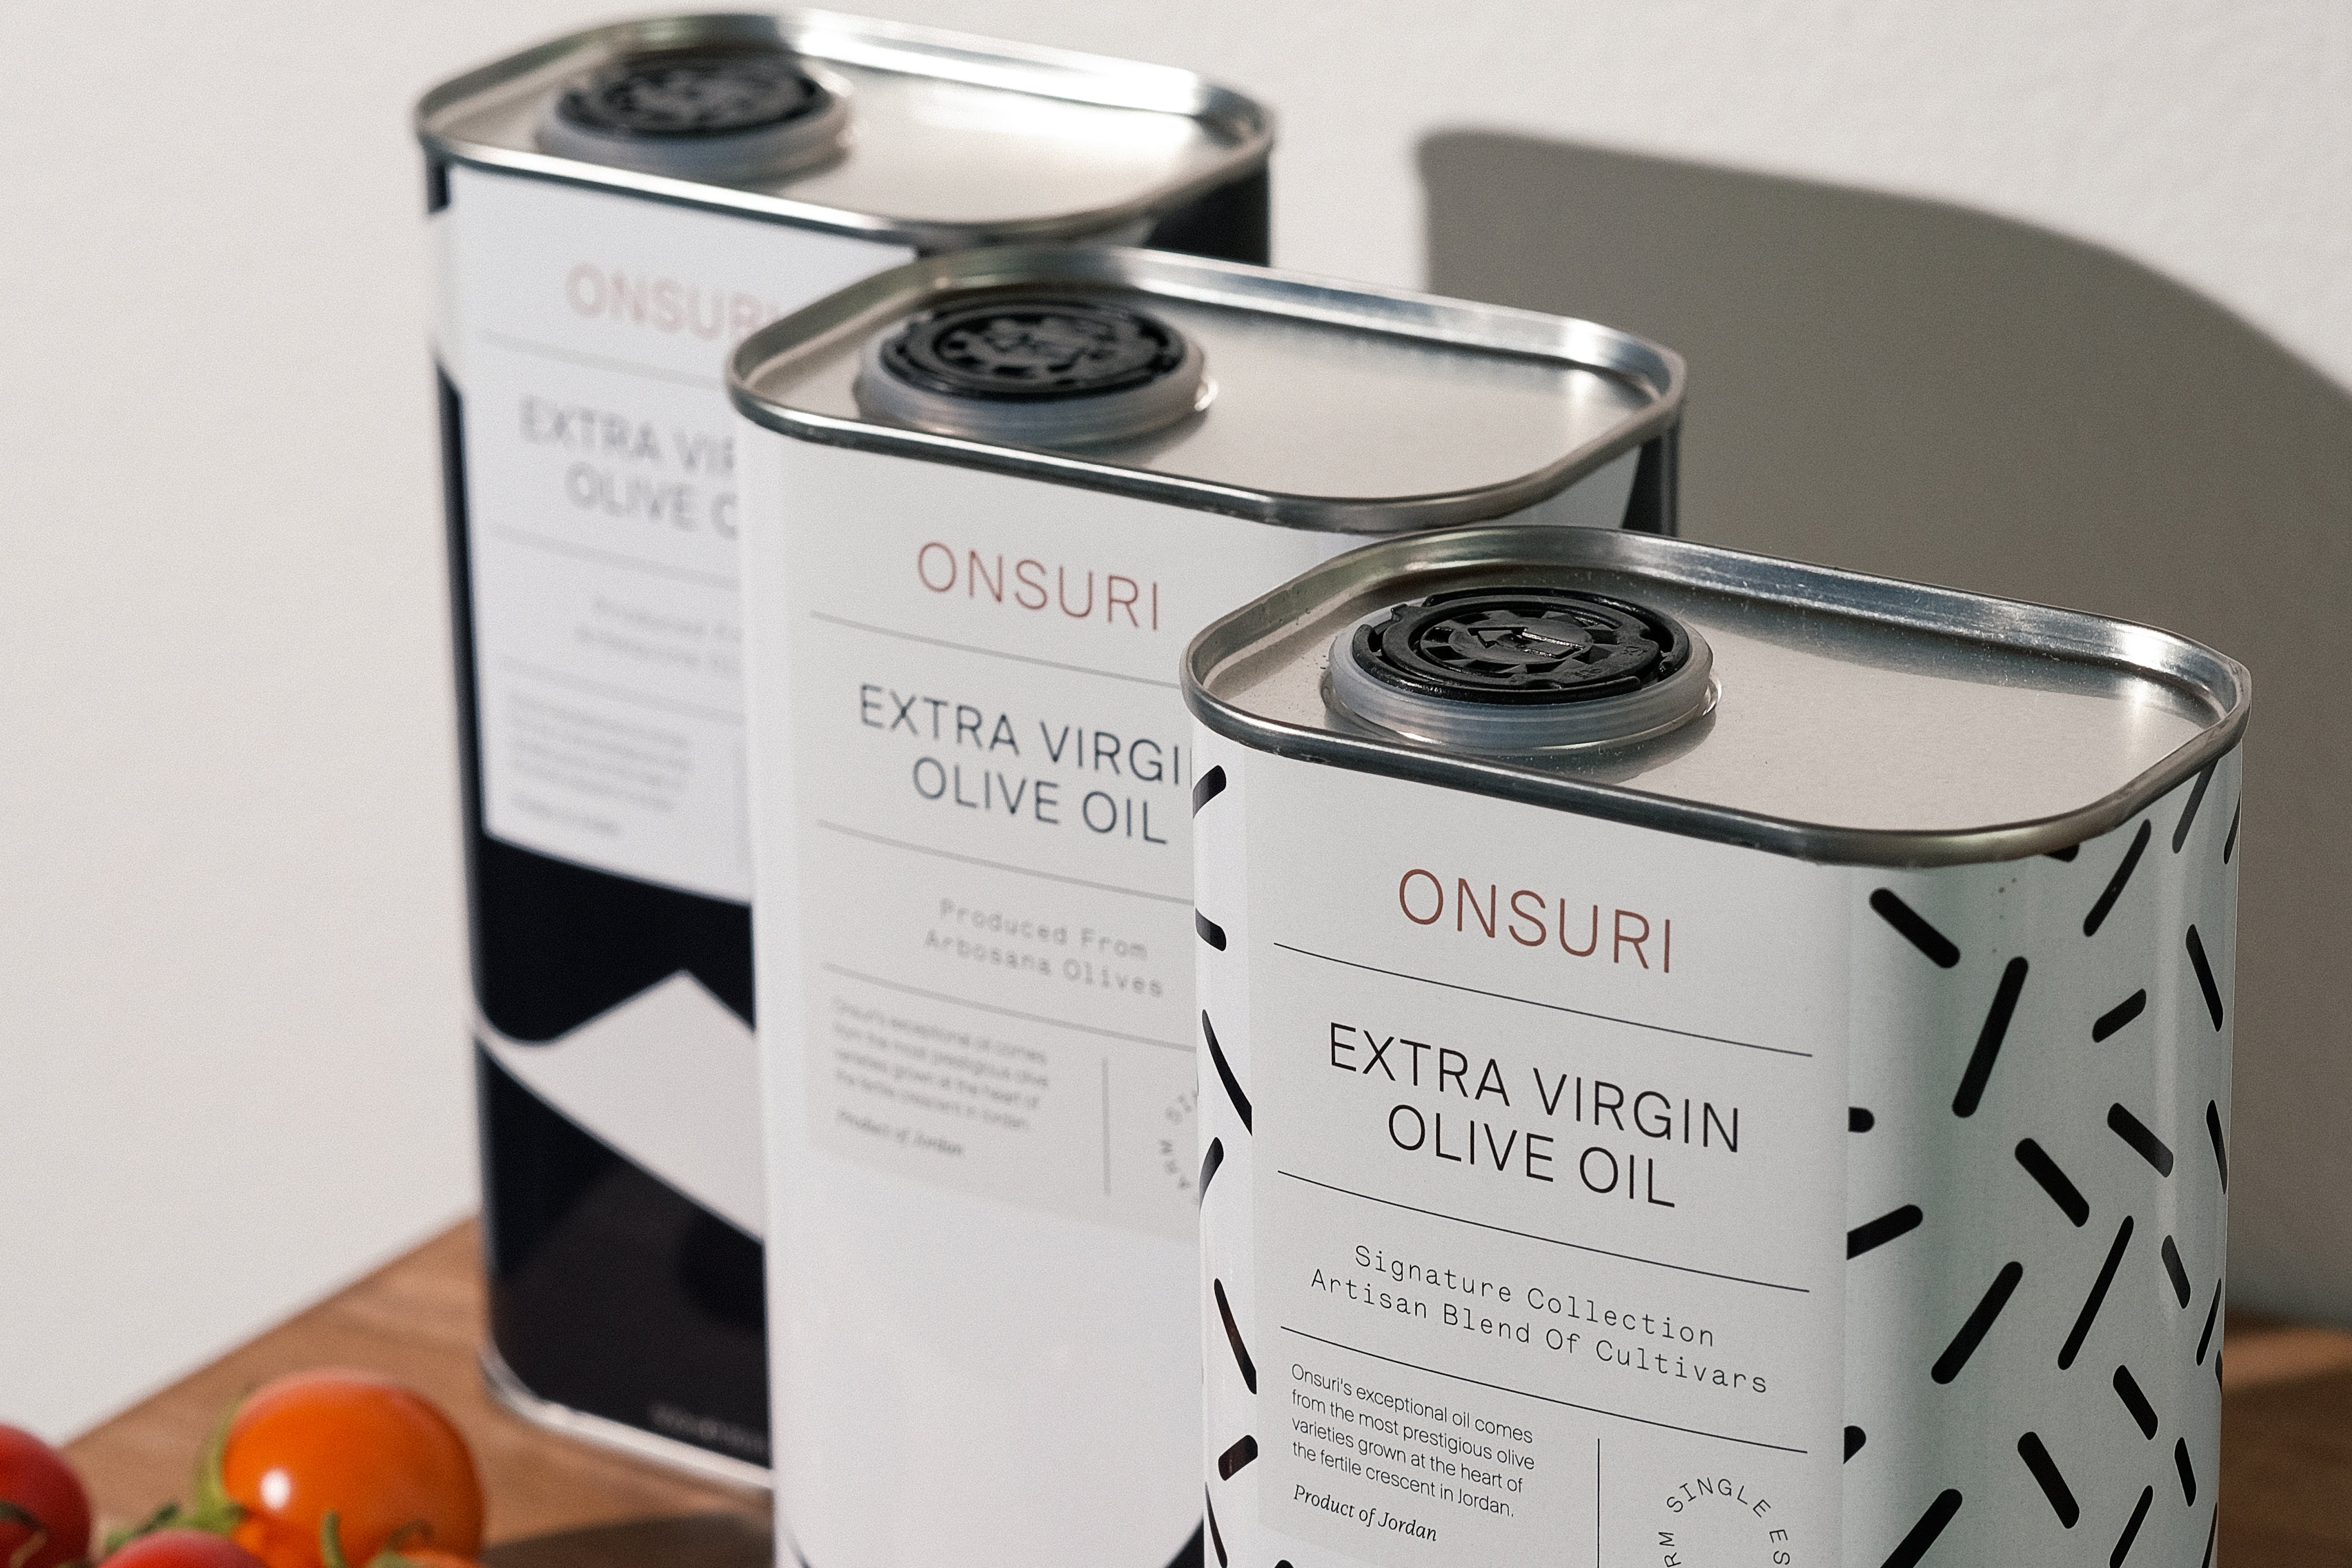 Bestseller Trio - Oil Onsuri Olive fl 16.9 (500ml) Lates Virgin x3 Extra – oz 